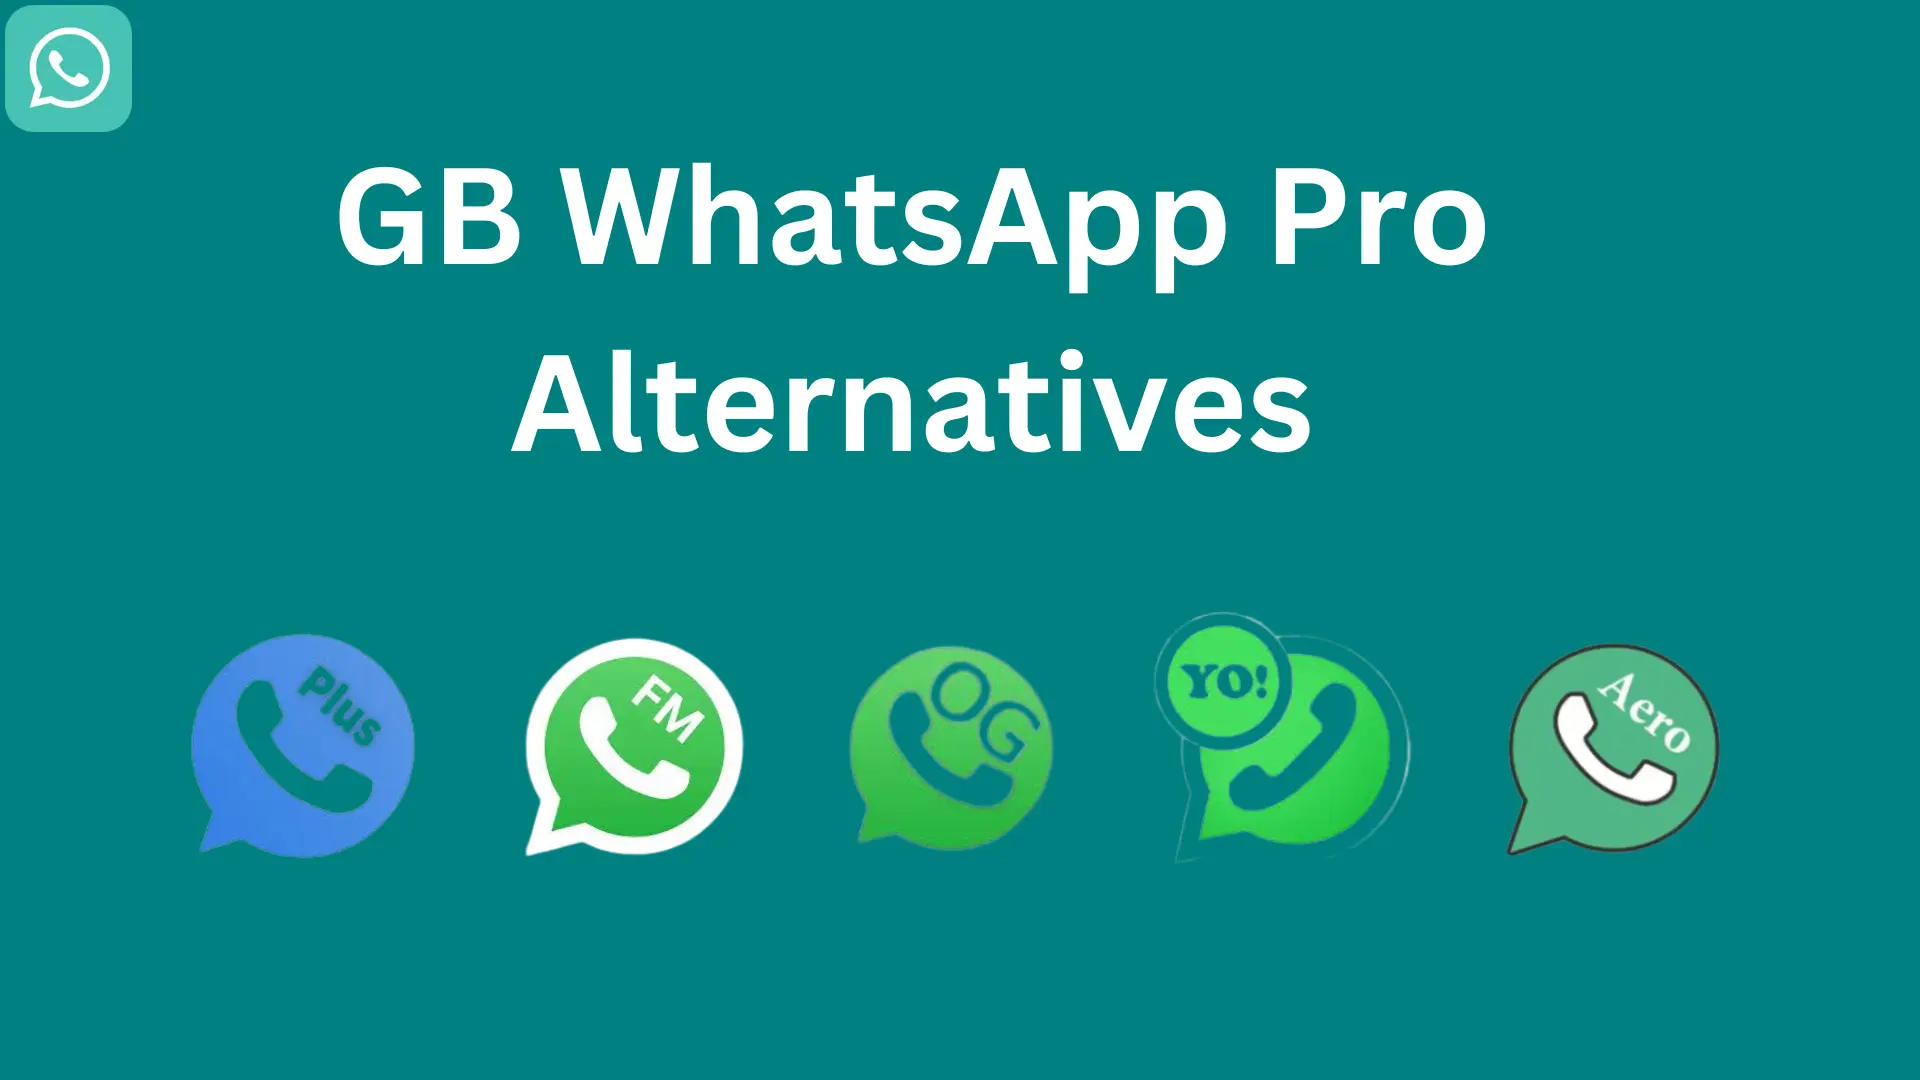 gb-whatsapp-pro-alternatives-featured-image